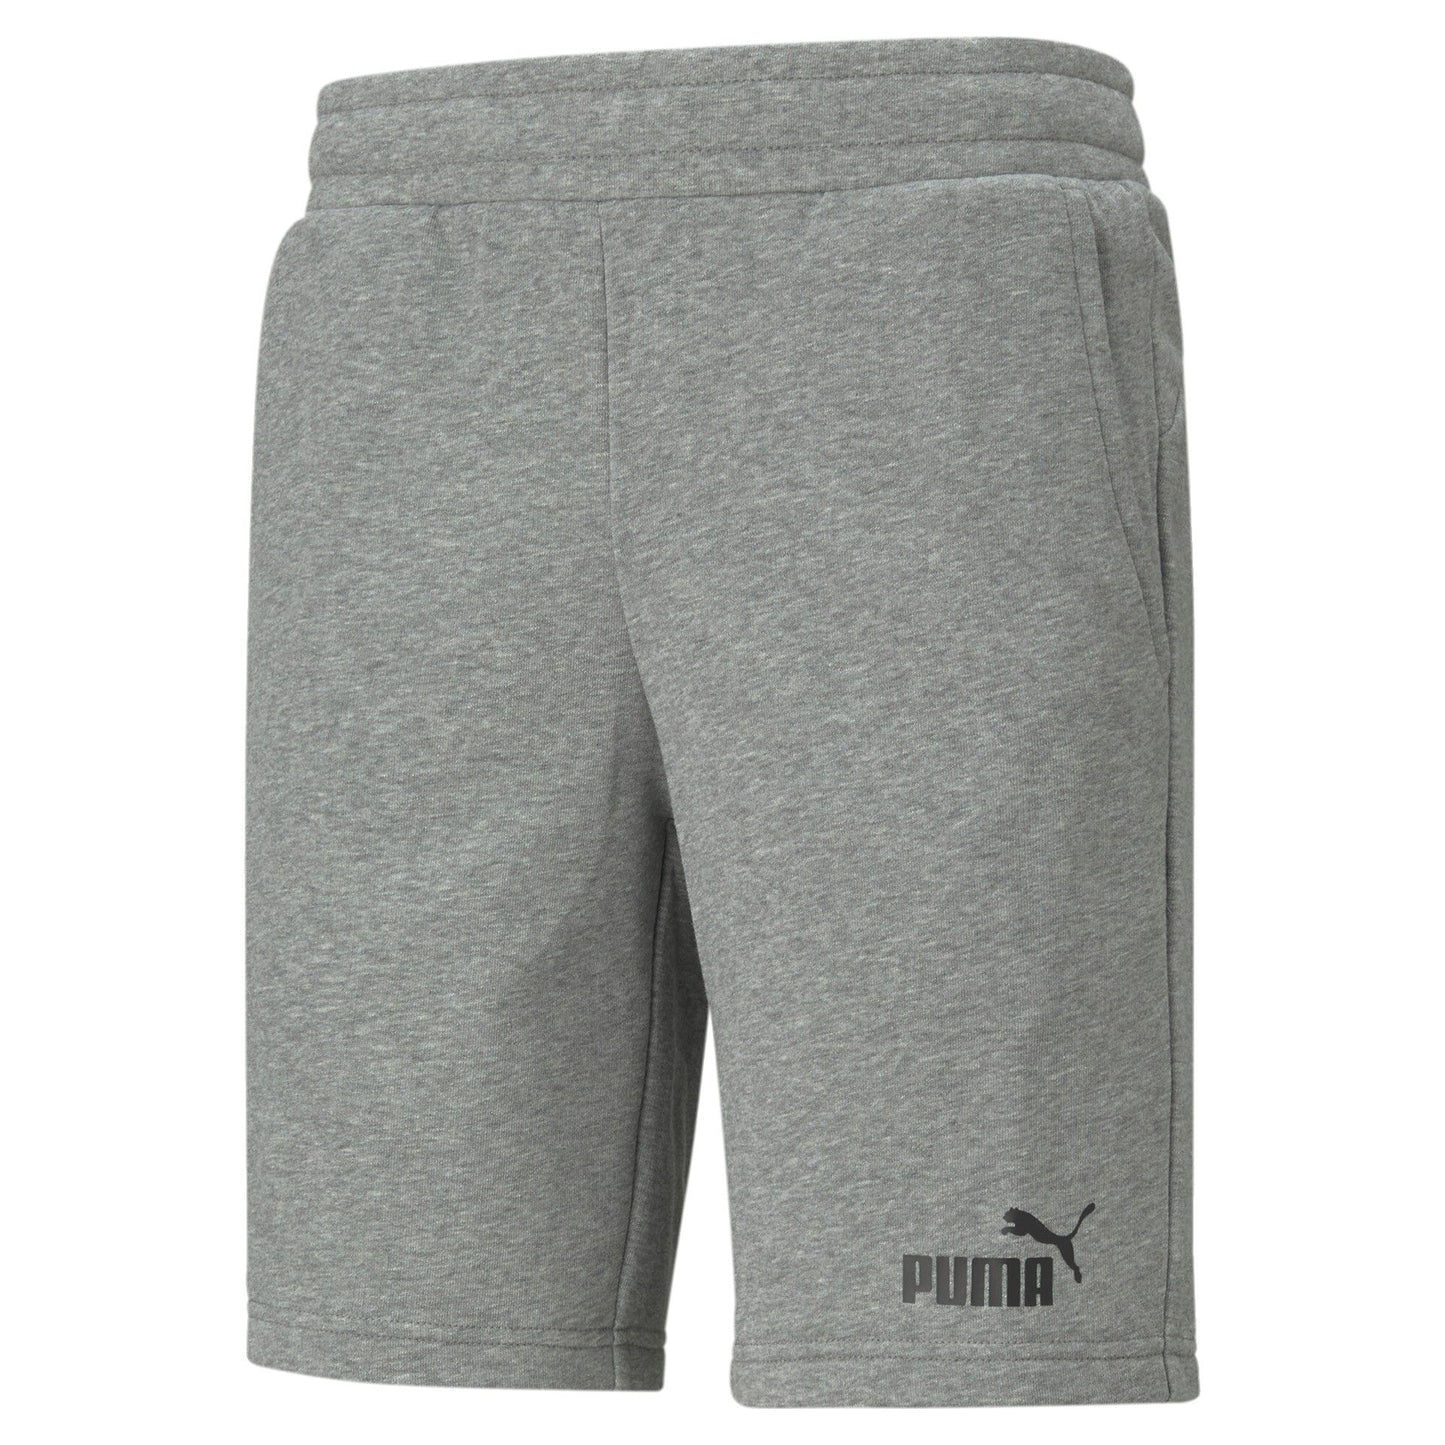 Bermuda / pantalón corto hombre Puma ESS SLIM SHORTS gris